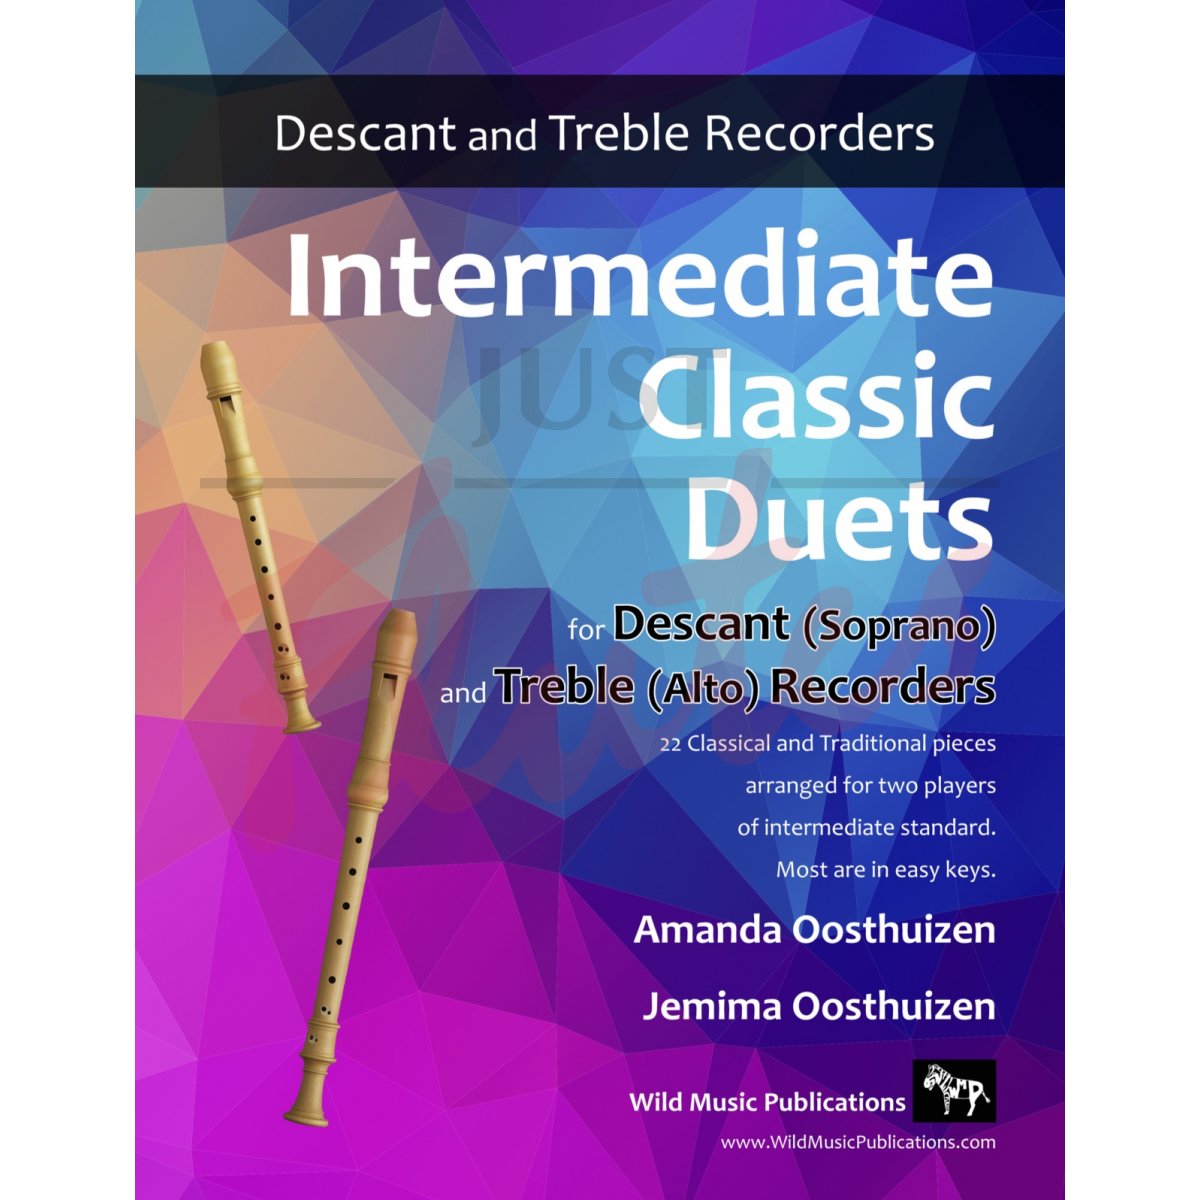 Intermediate Classic Duets for Descant and Treble Recorders